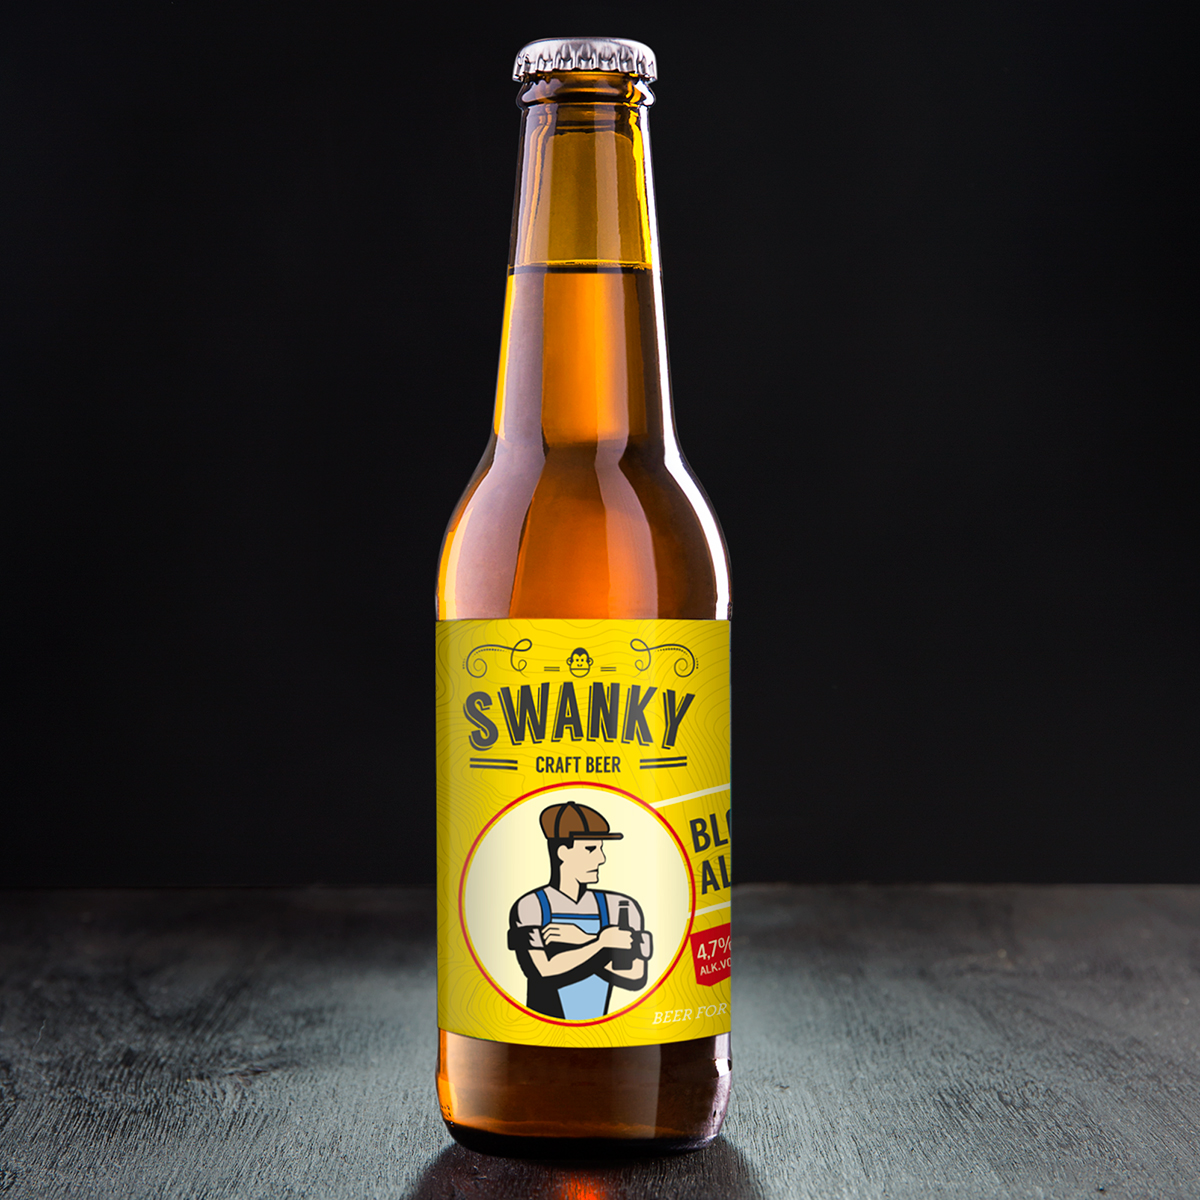 Swanky<br>Blonde<br>Ale